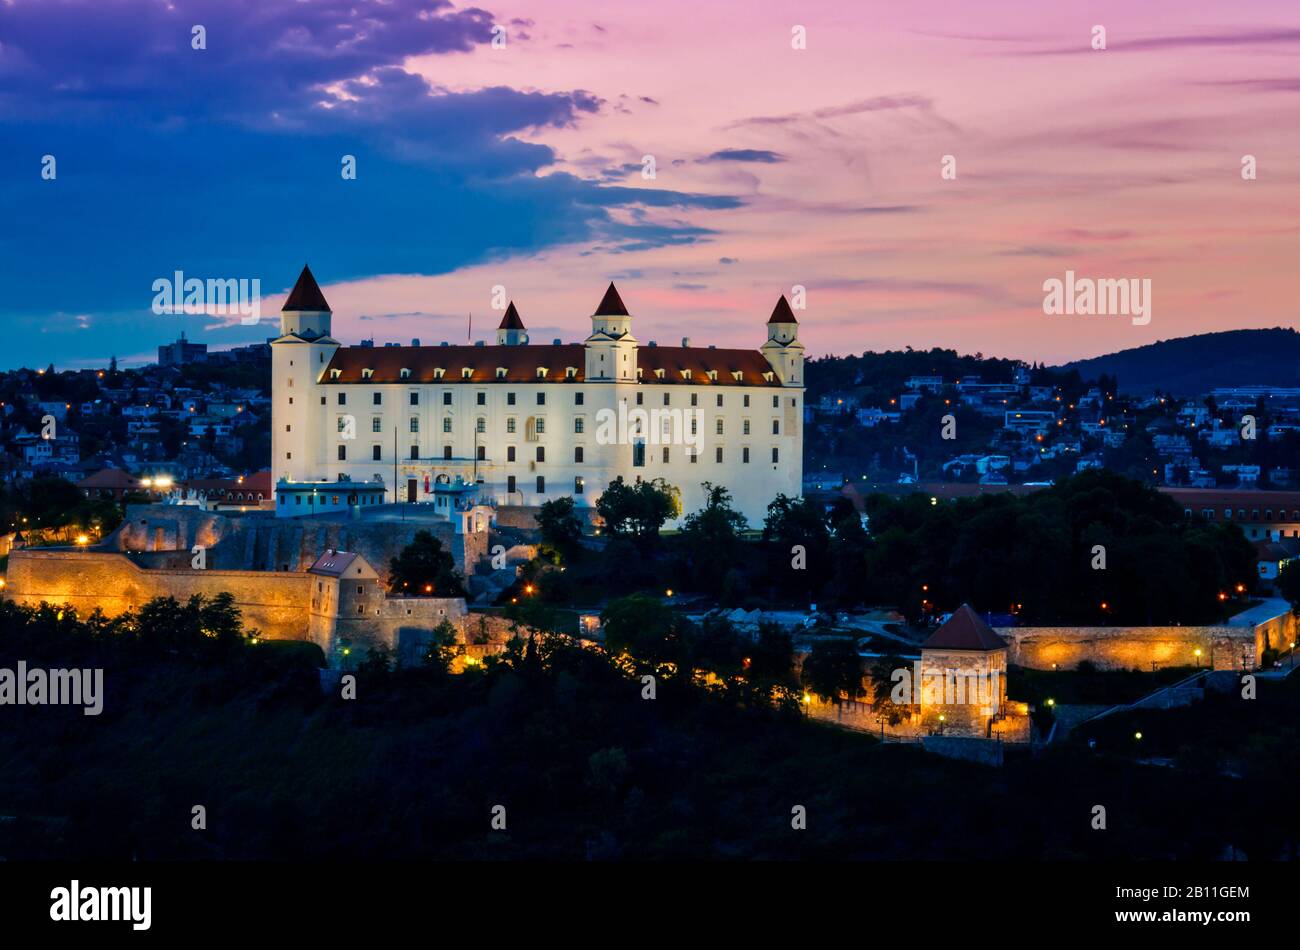 Bratislava Castle at night. City panorama with night illumination Stock Photo